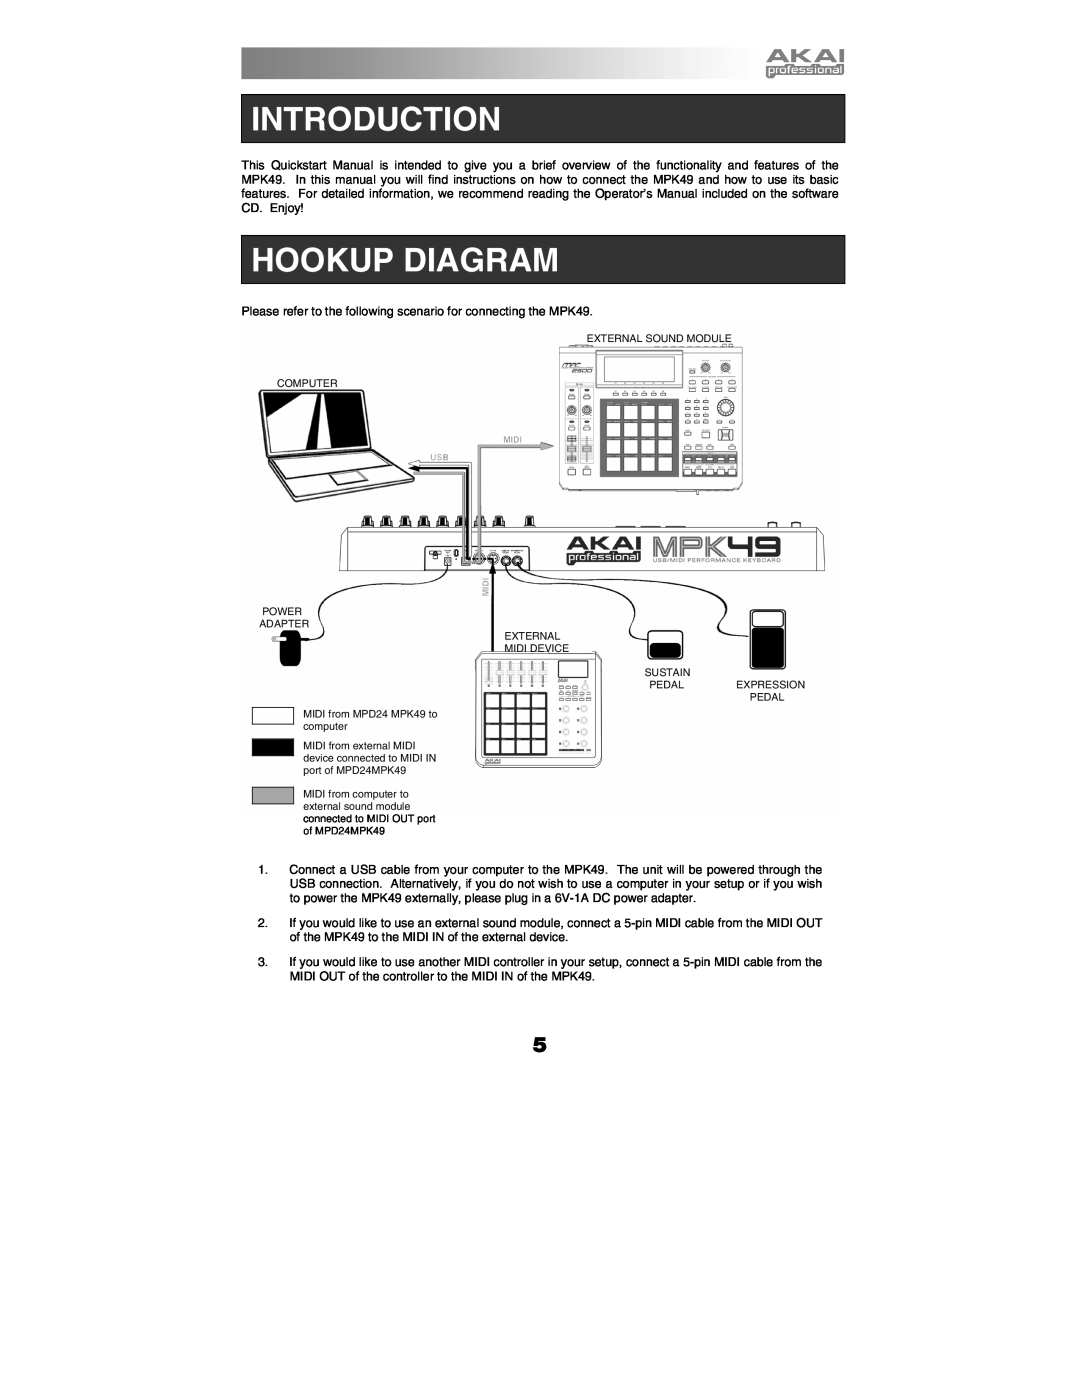 Akai MPK49 quick start manual Introduction, Hookup Diagram 